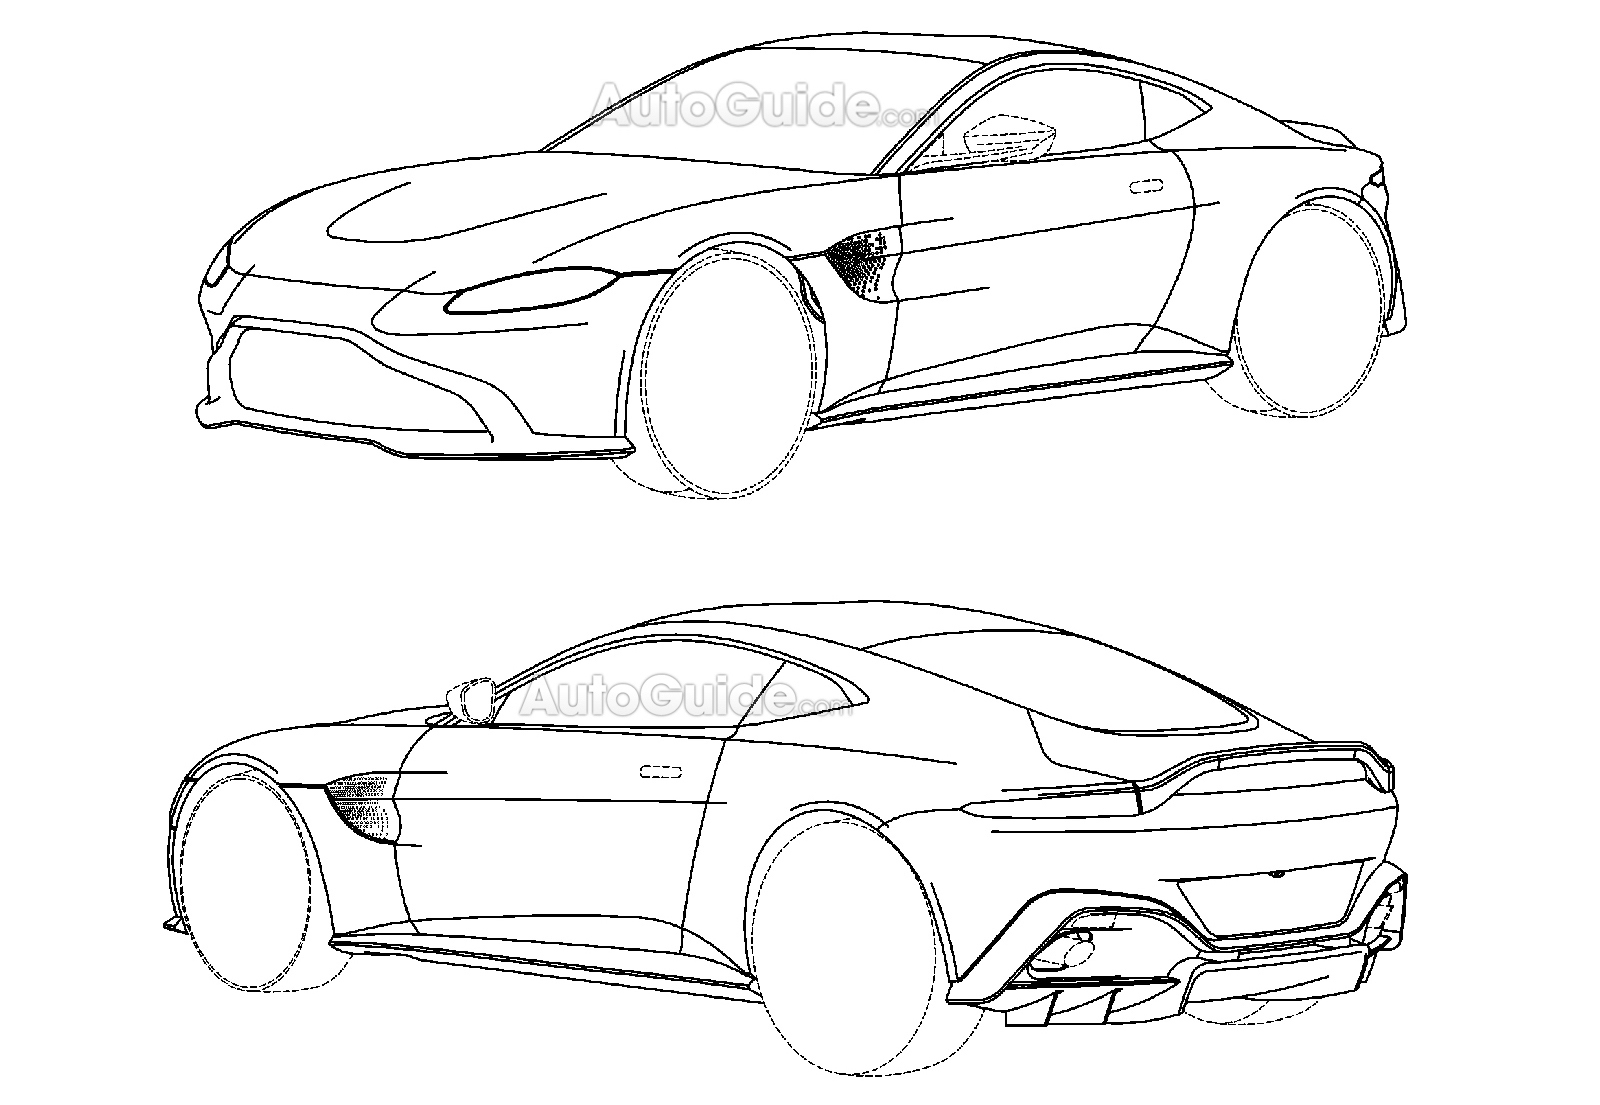 Next-gen Aston Martin Vantage previewed via patent images